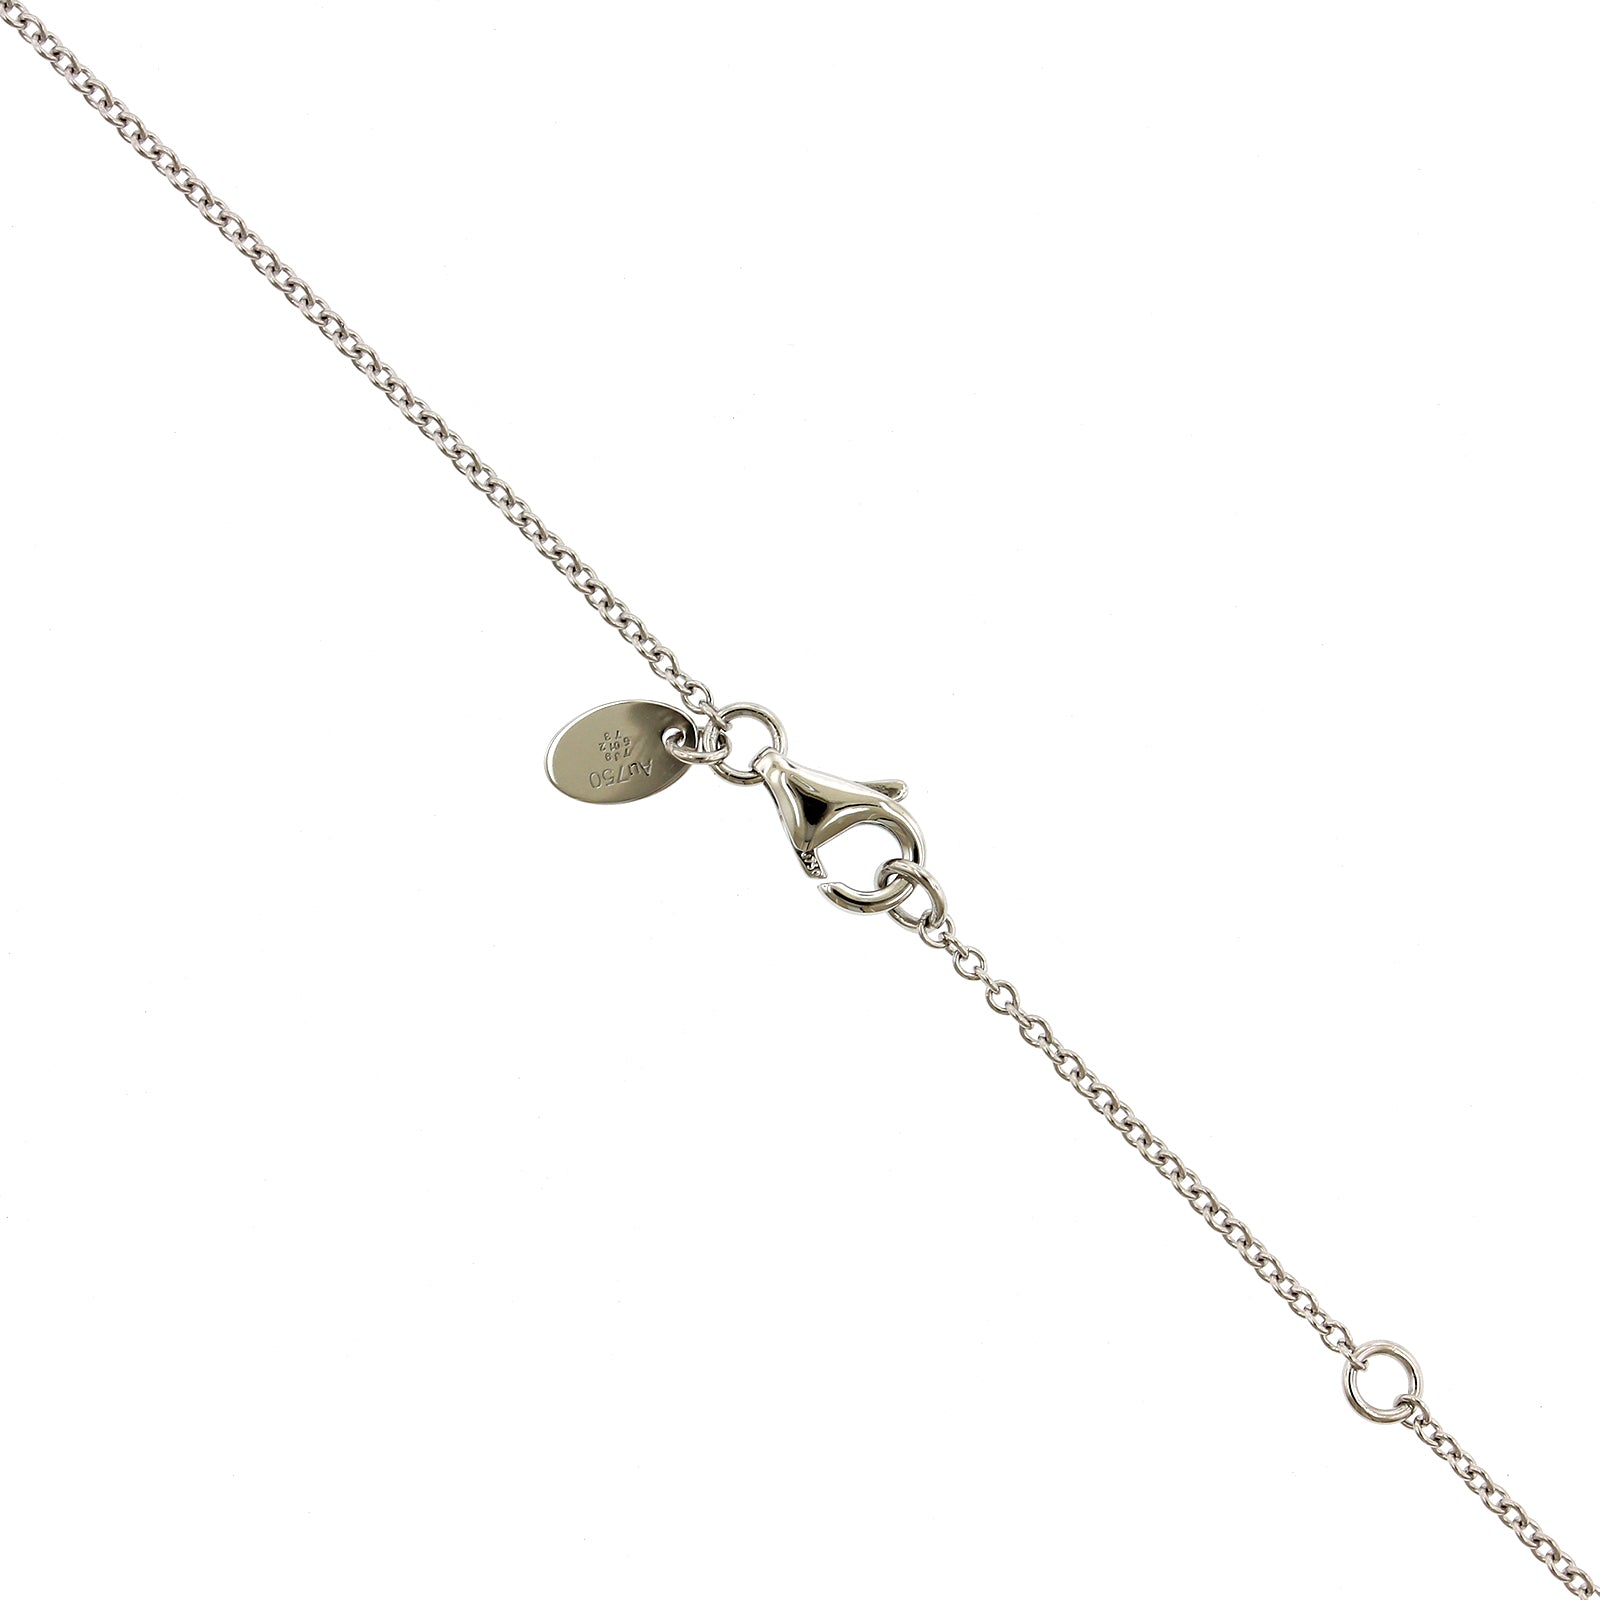 18K White Gold Diamond Line Necklace